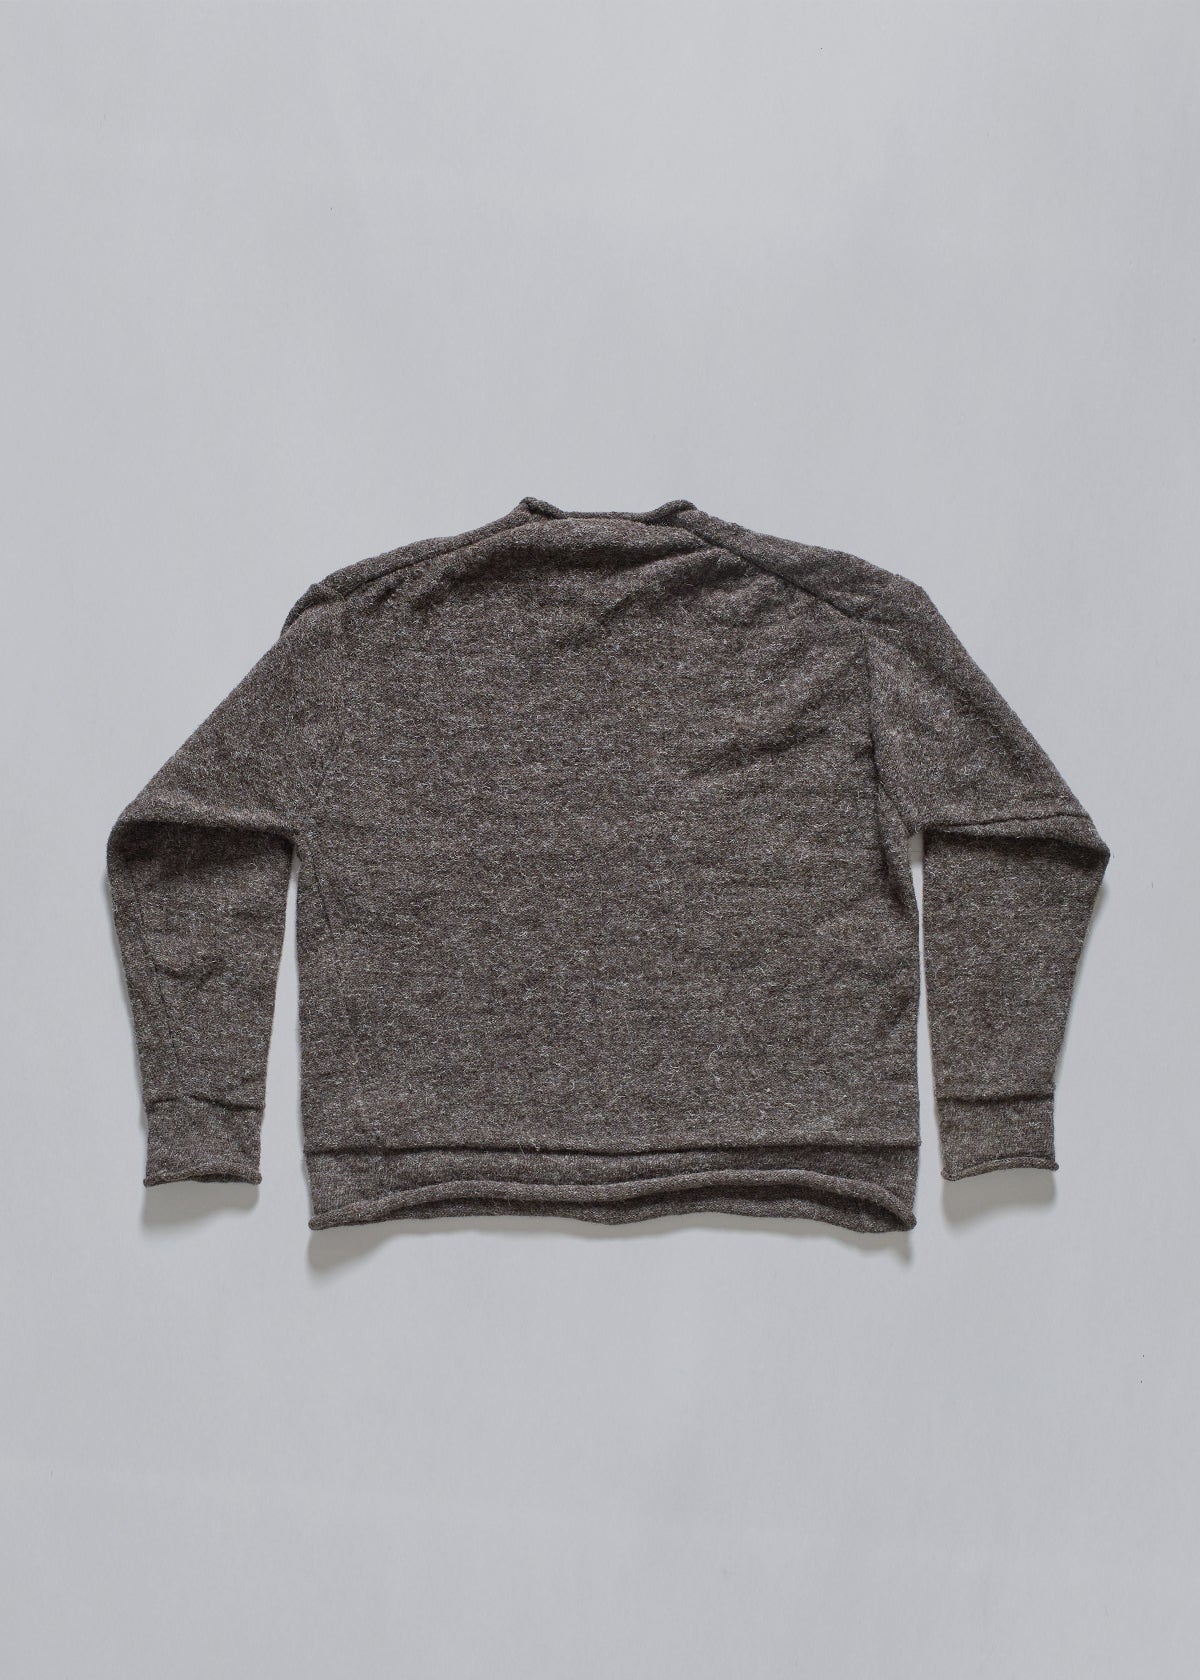 Homme Artisanal Wool Knit 1998 - Medium - The Archivist Store